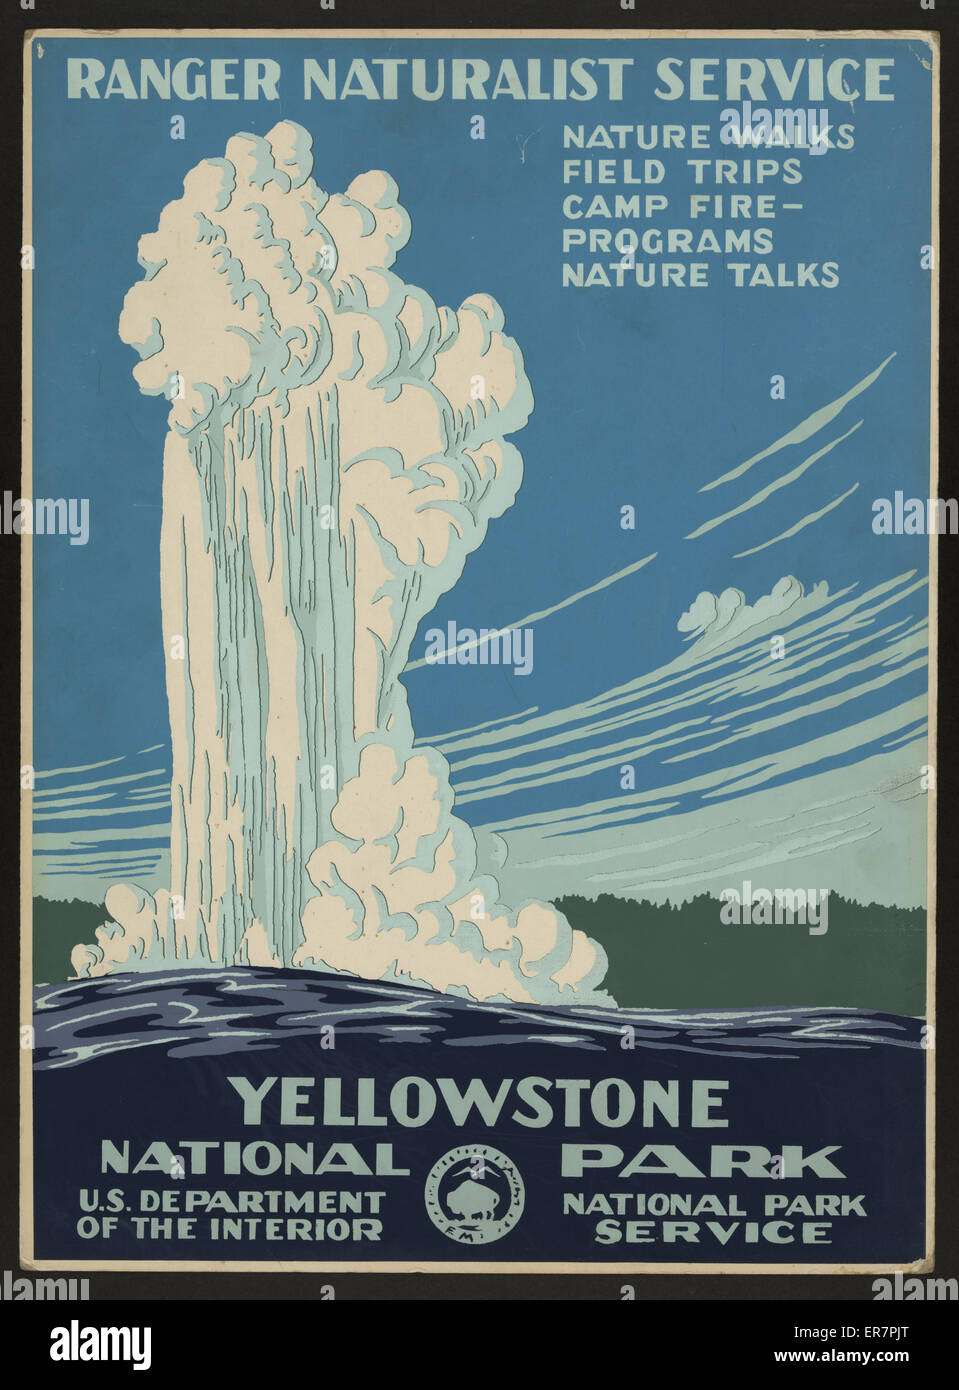 Yellowstone National Park, Ranger Naturalist Service Stock Photo